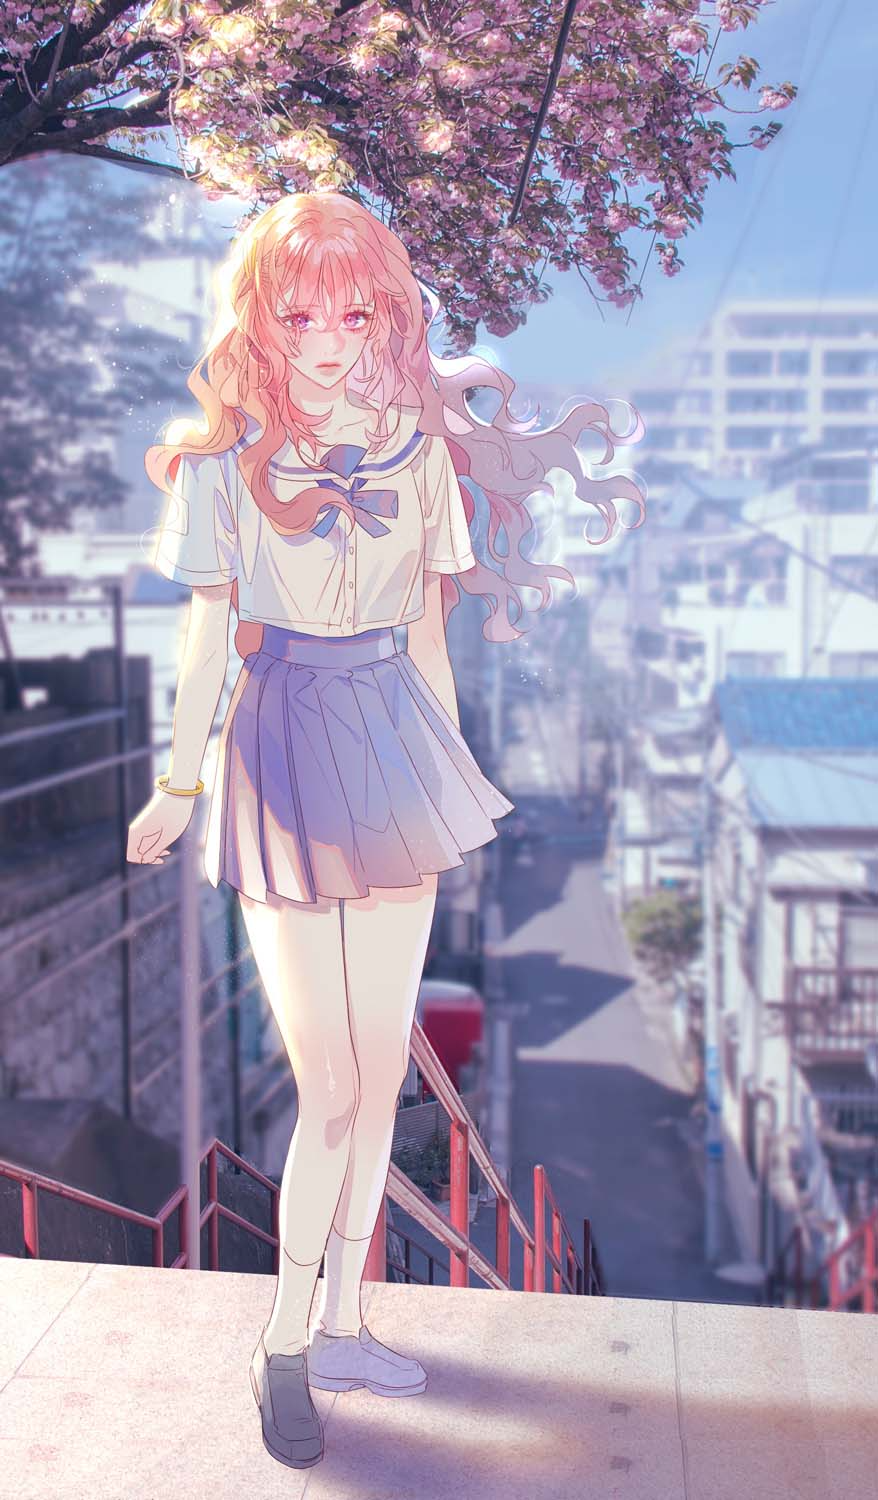 Anime School Girl IPhone Wallpaper HD  IPhone Wallpapers